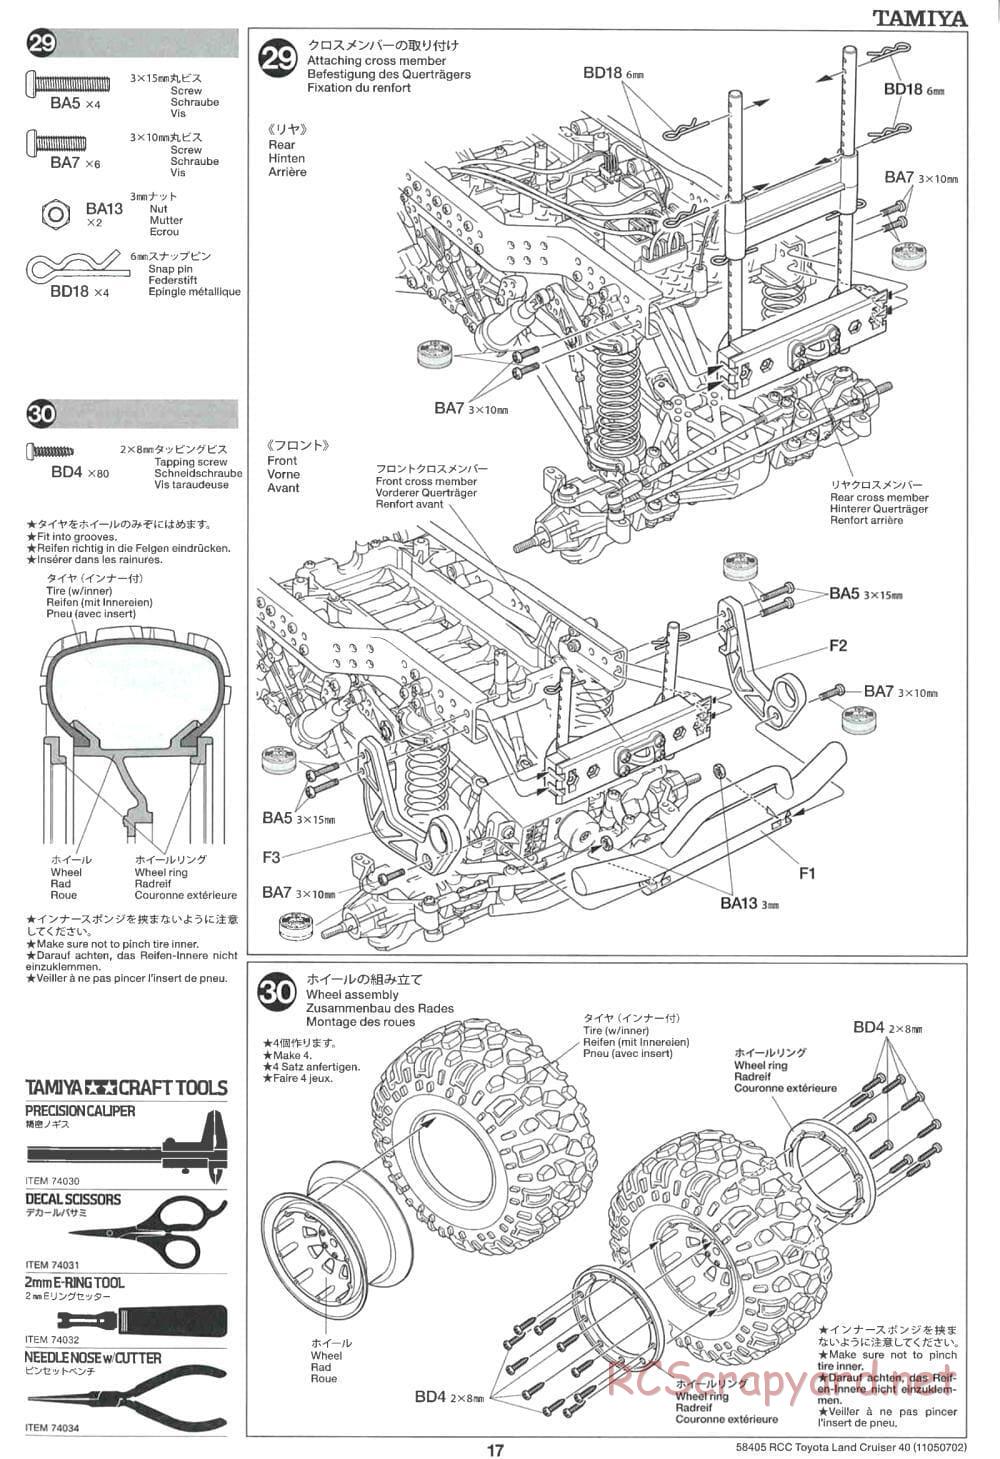 Tamiya - Toyota Land Cruiser 40 - CR-01 Chassis - Manual - Page 17